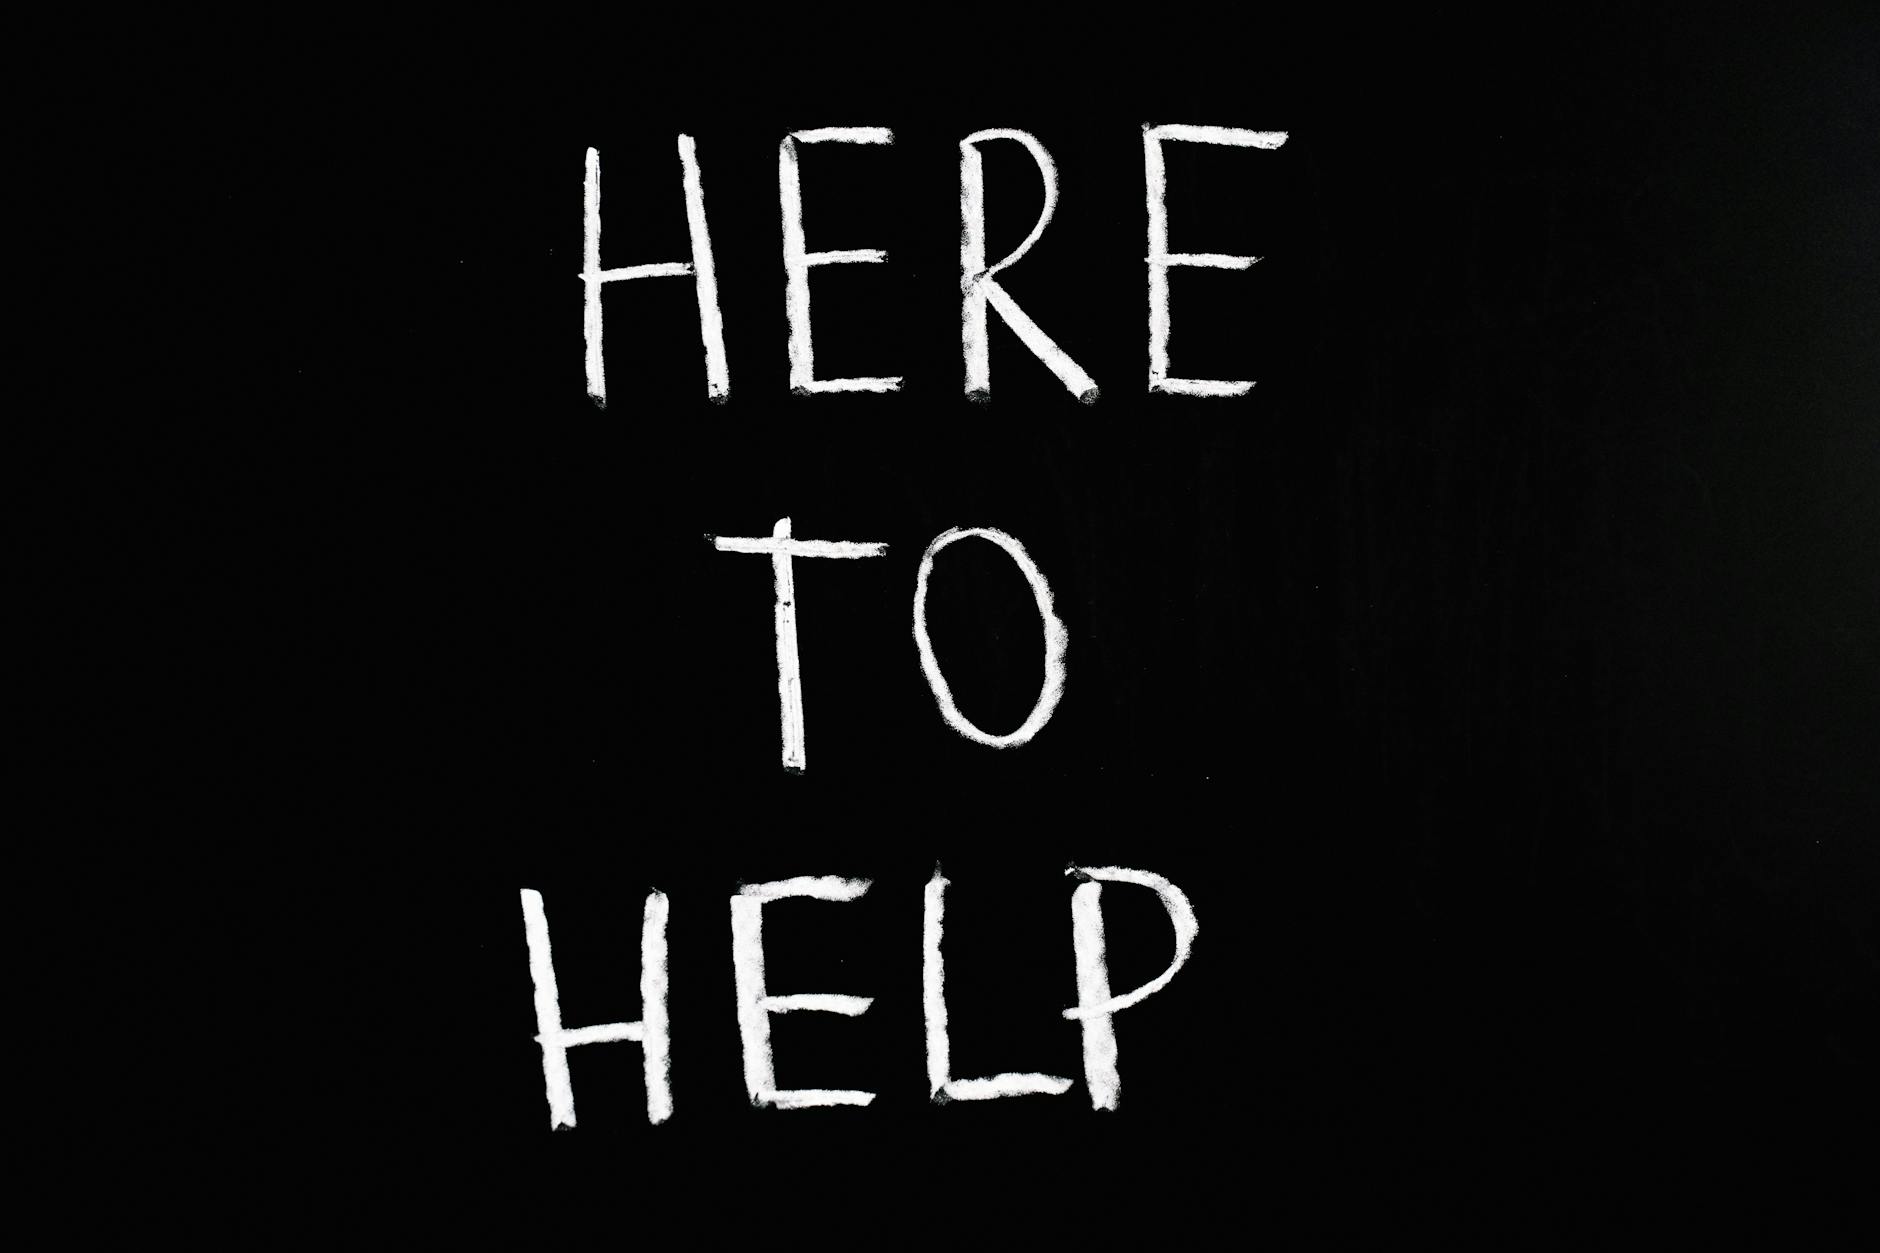 Blackboard with handwritten message in white chalk: "Here to Help"

Photo by Anna Tarazevich on Pexels.com